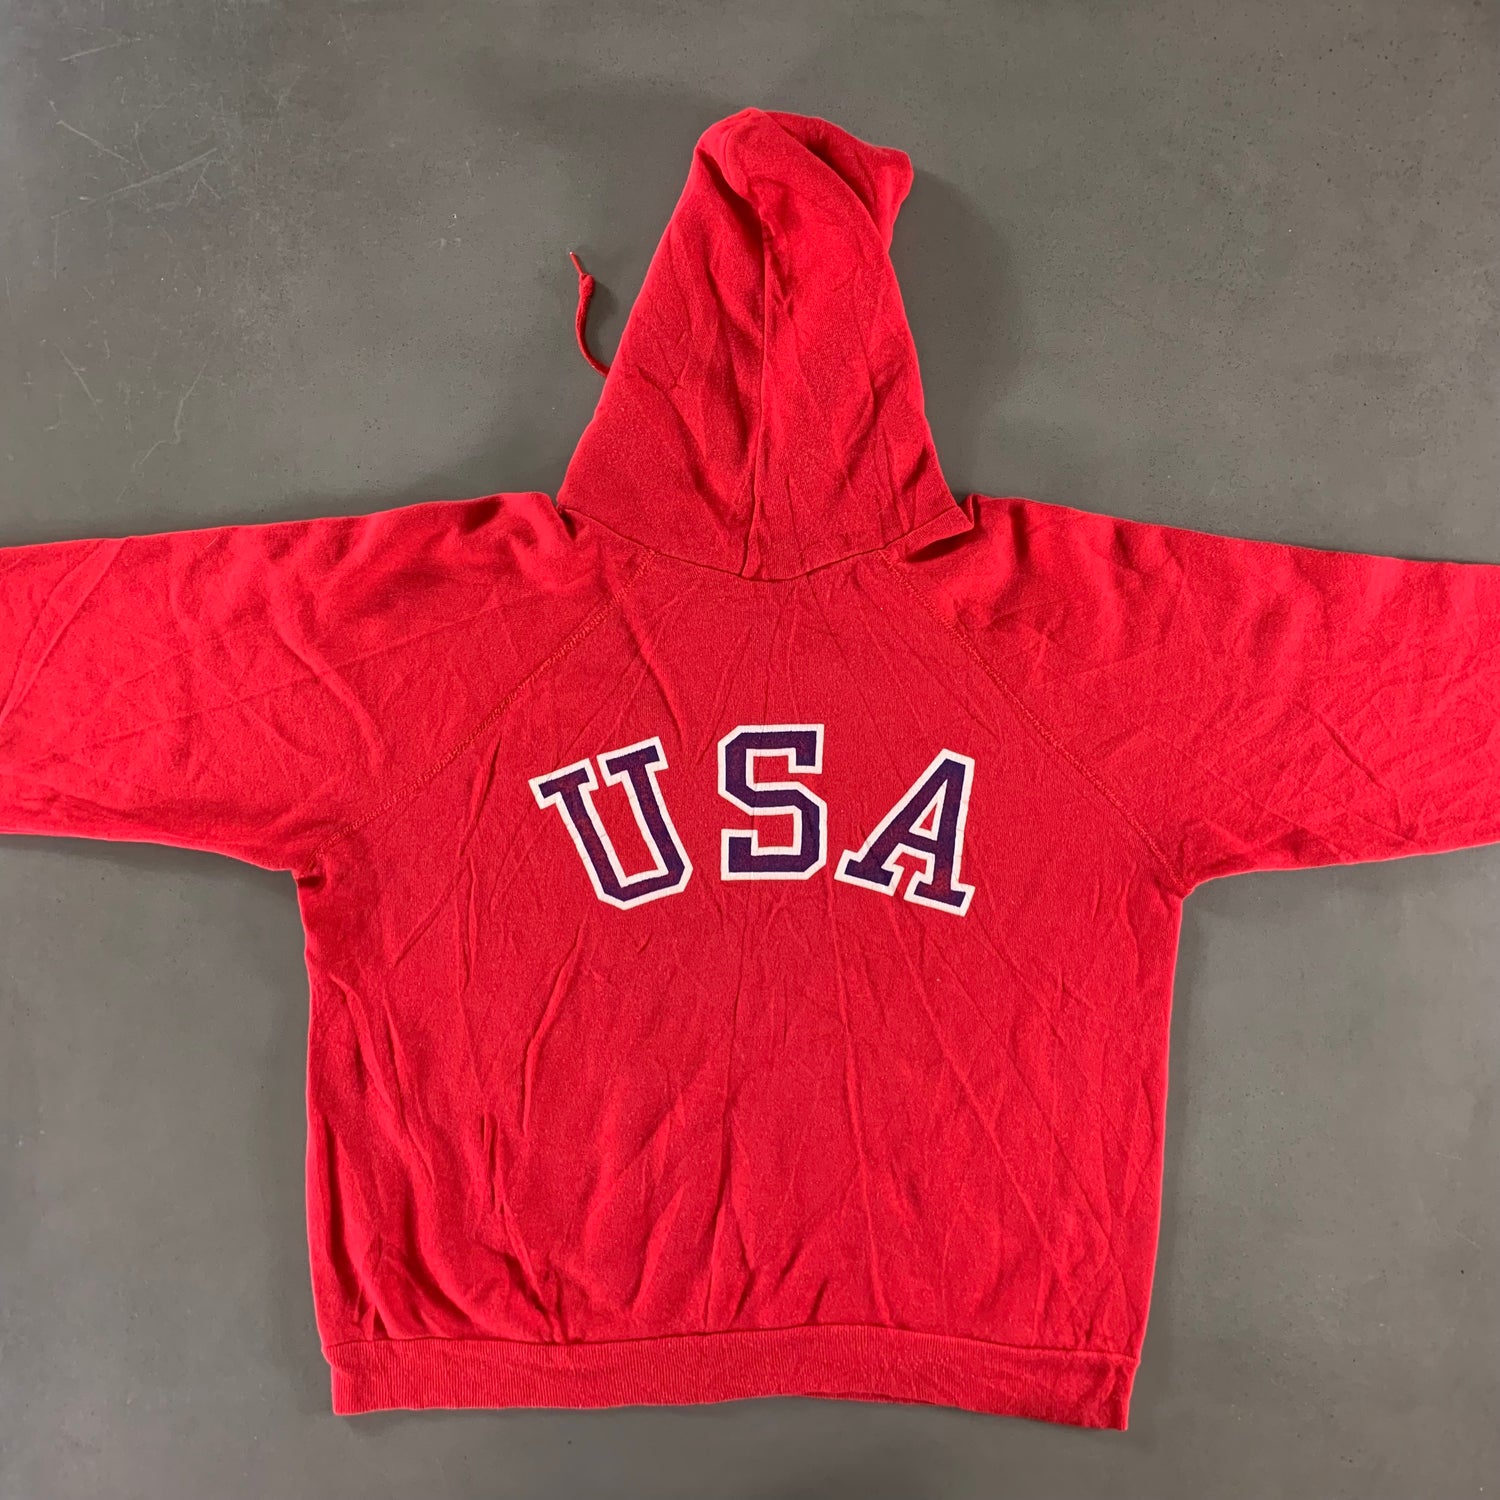 Vintage 1980s USA Ski Team Sweatshirt size XL